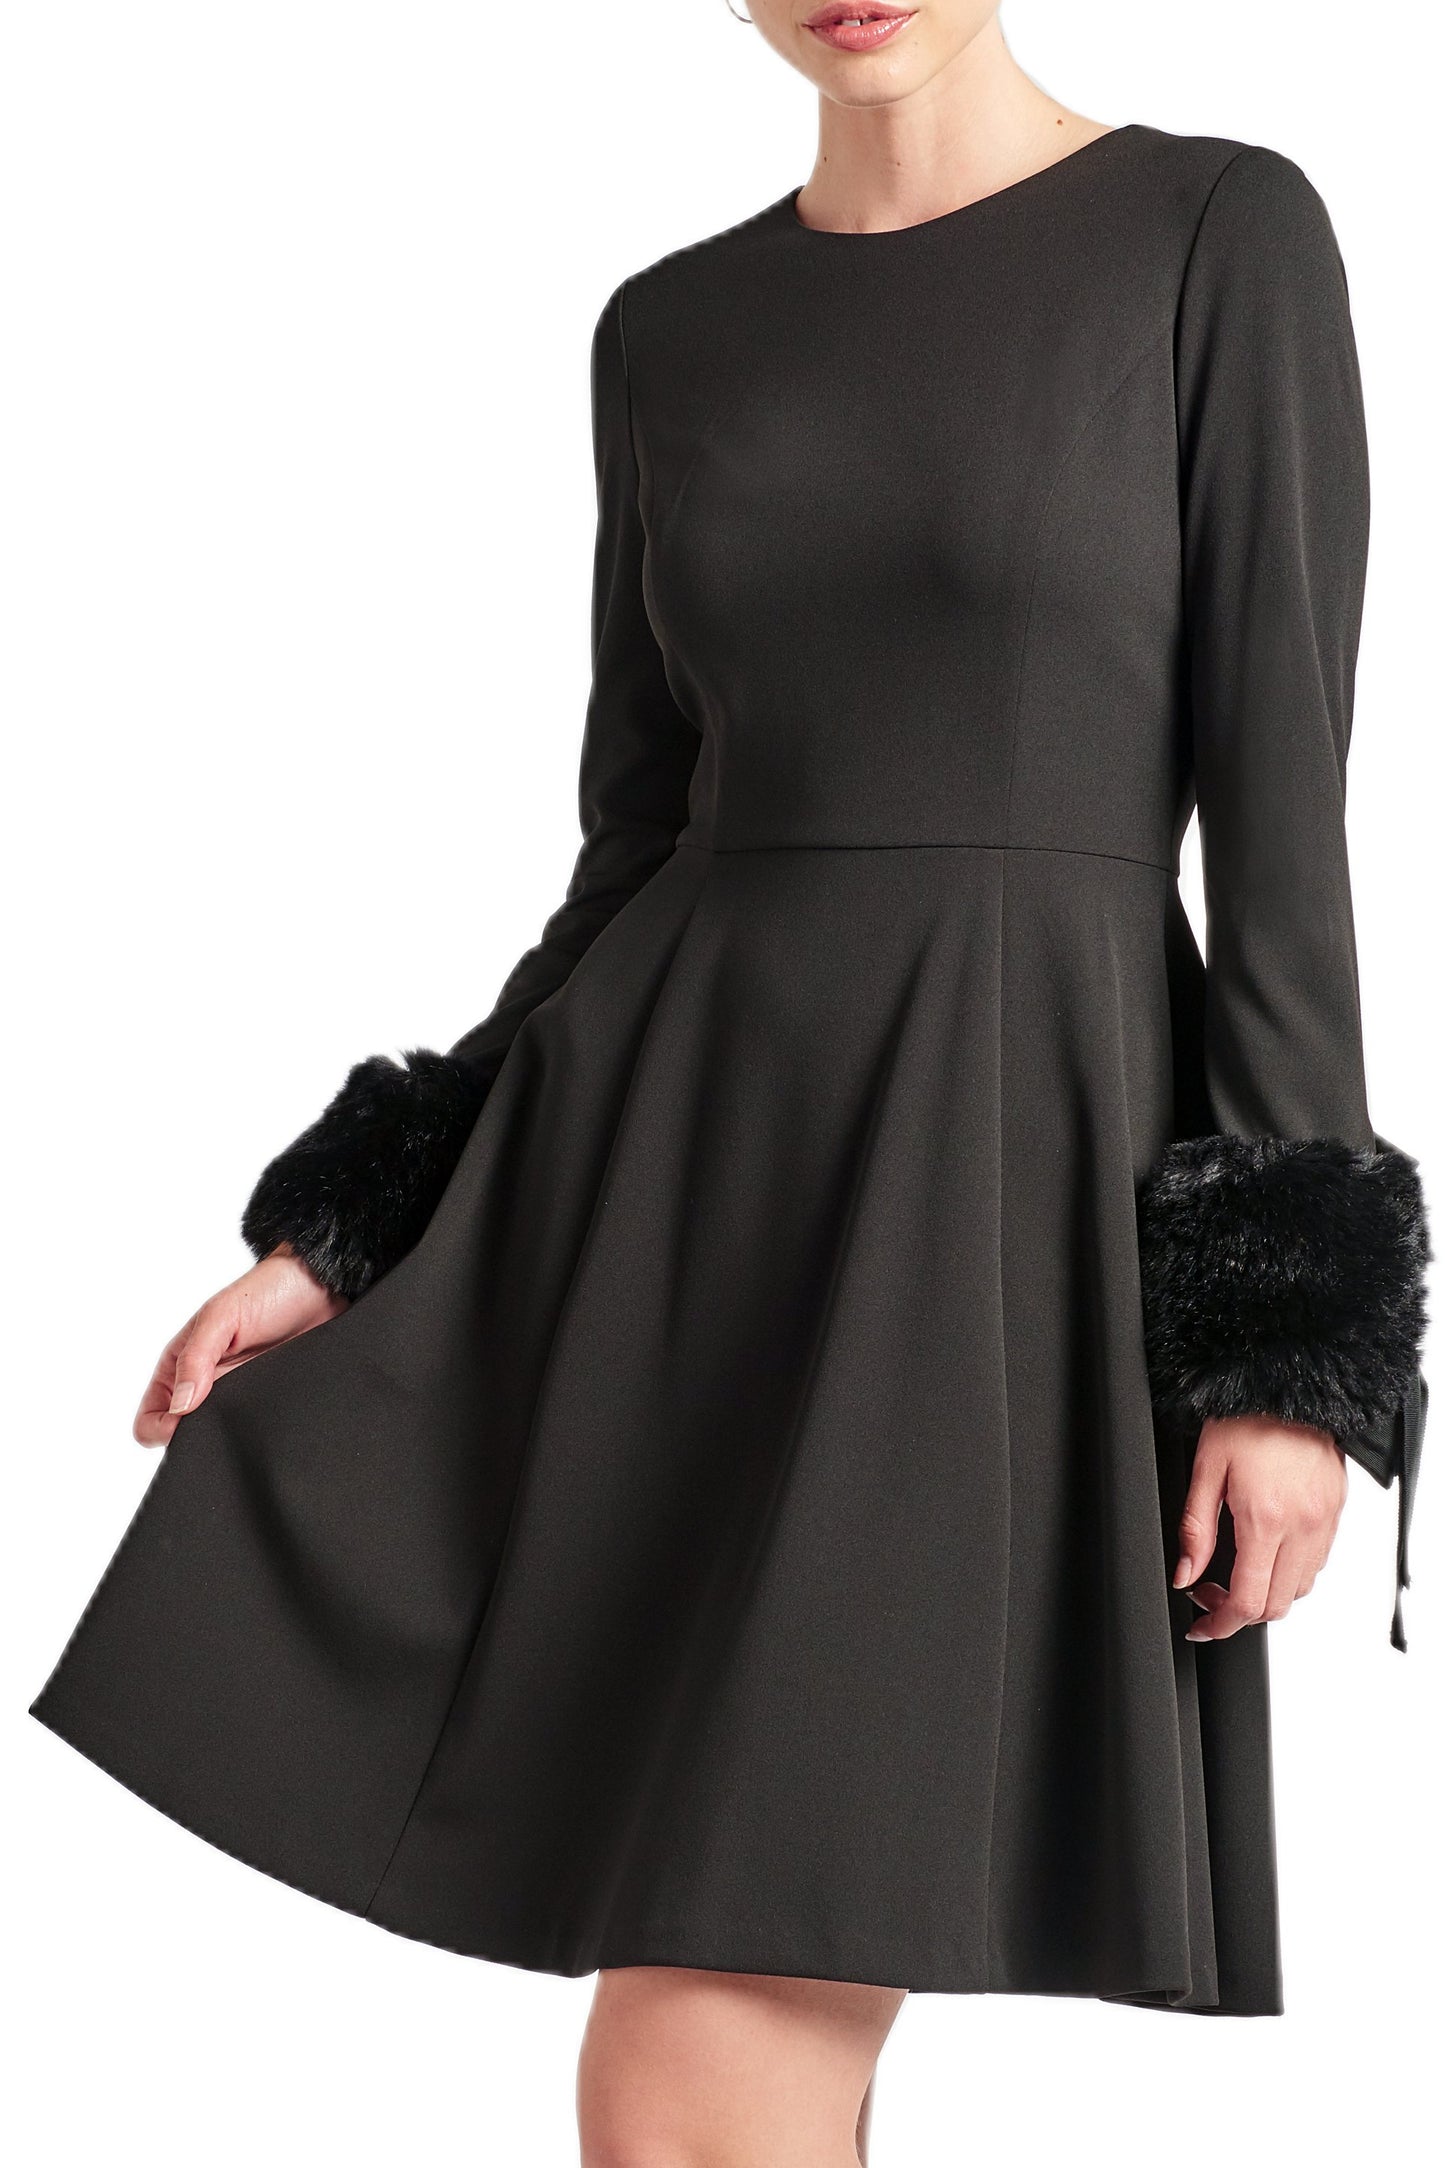 Caroline Dress - Crepe fit & flare dress with faux fur cuffs